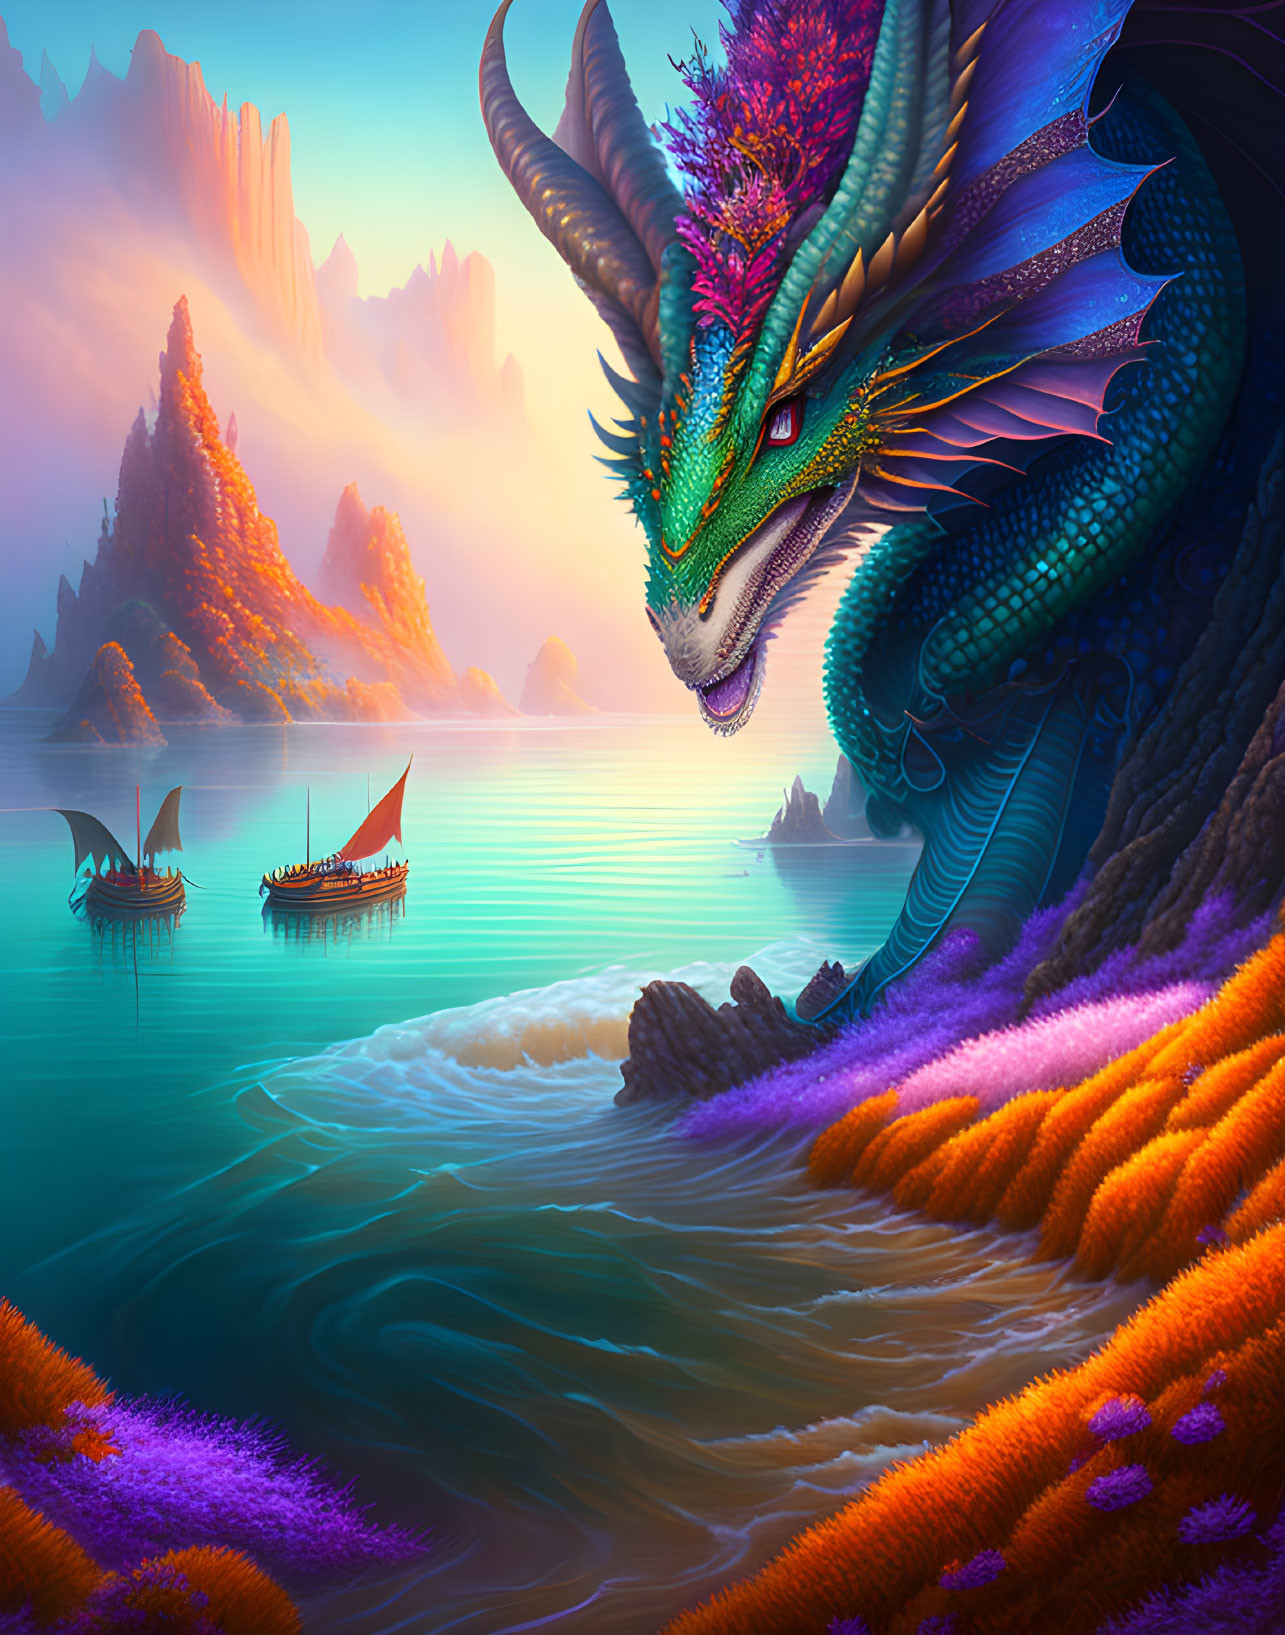 Majestic dragon overlooking serene sea at sunset